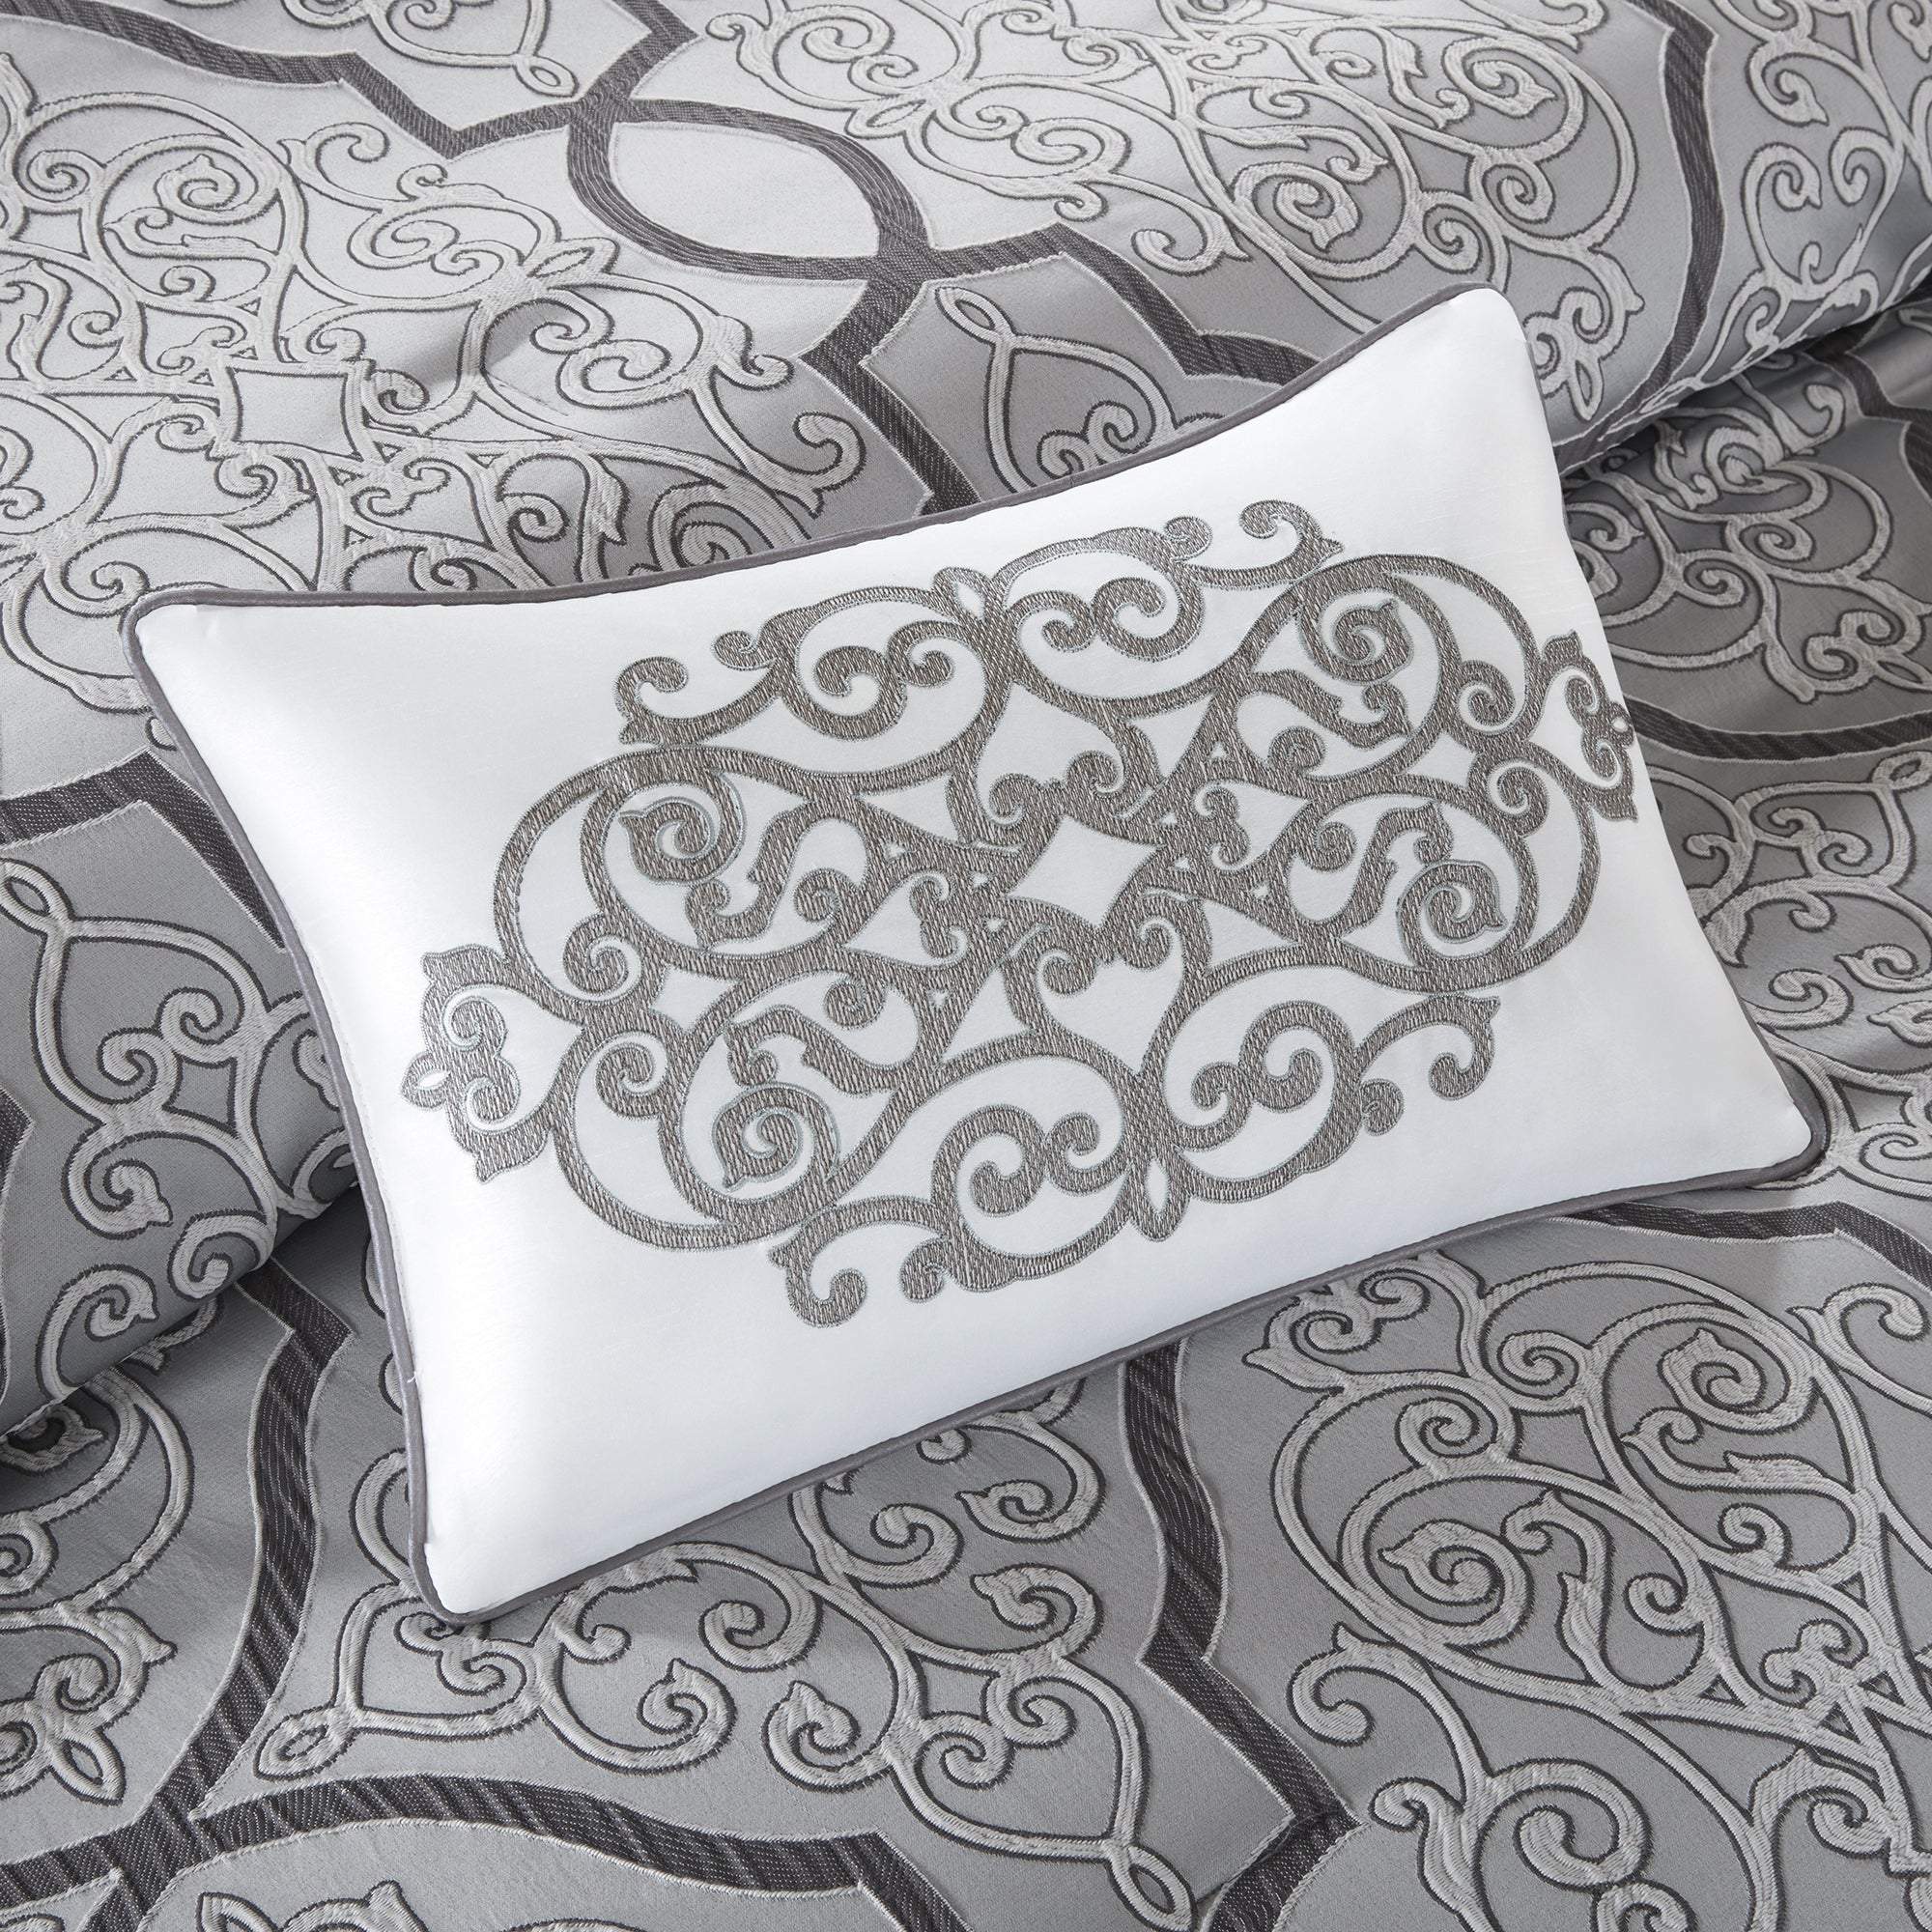 Lavine Silver 12-Piece Comforter Set Comforter Sets By Olliix/JLA HOME (E & E Co., Ltd)